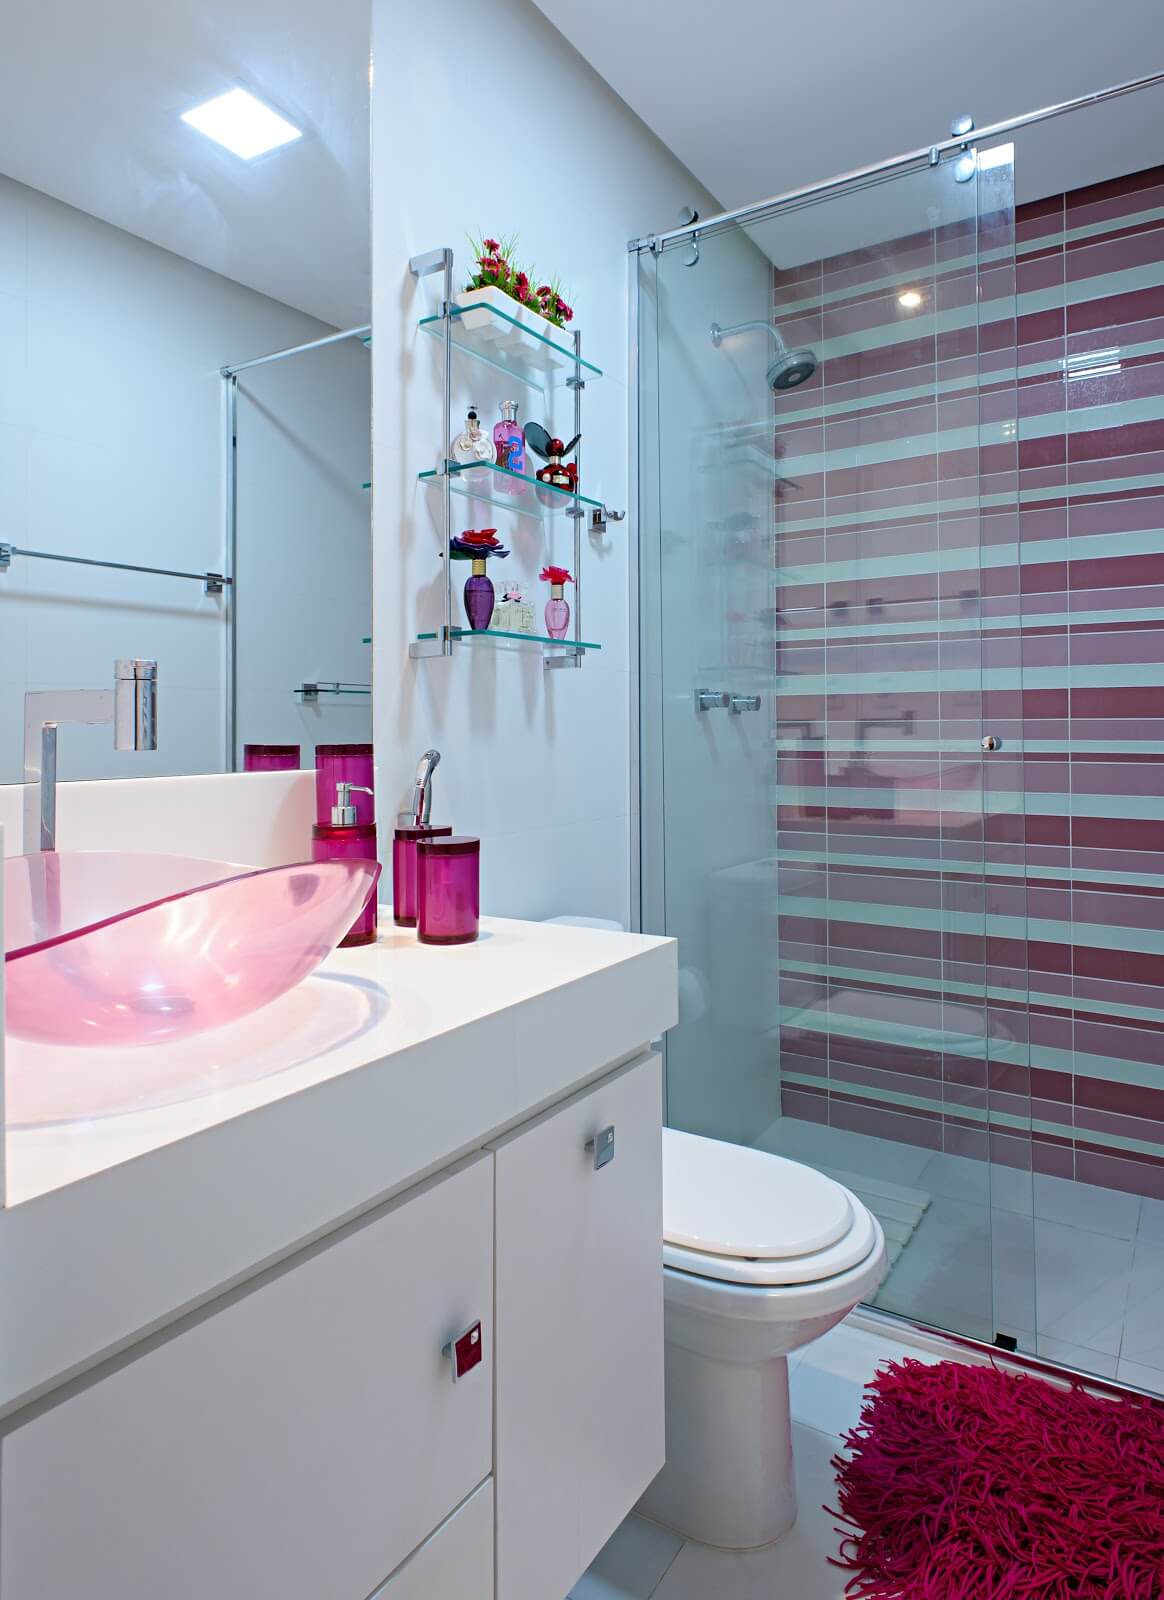 7 – Pink glass tub